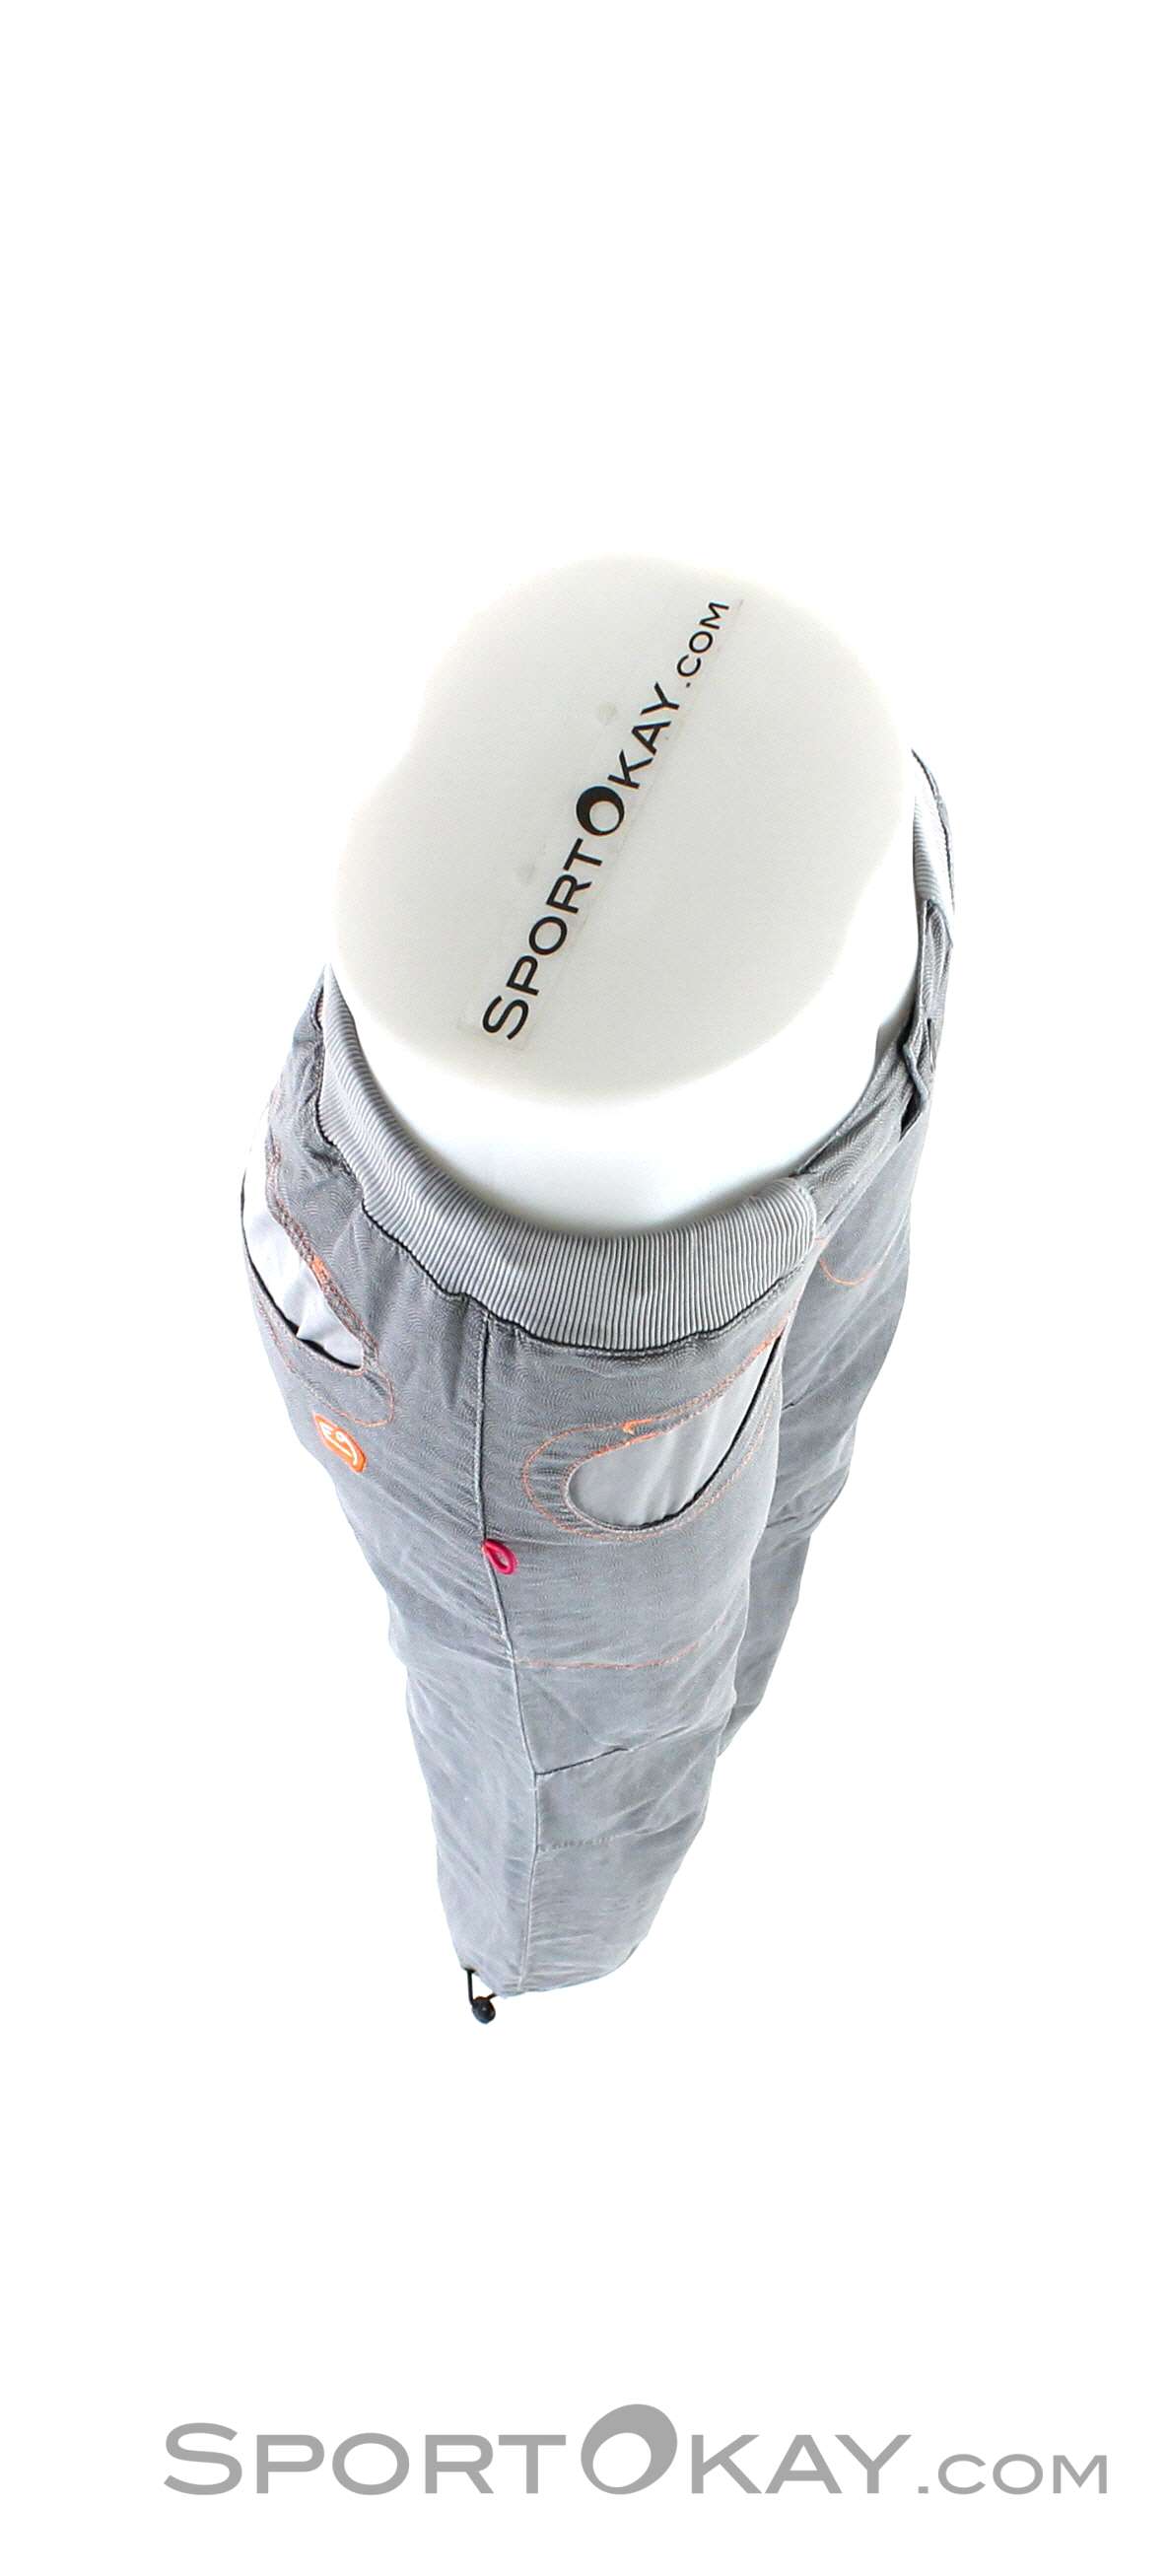 E9 Onda Slim Art Womens Climbing Pants - Pantalones - Indumentaria